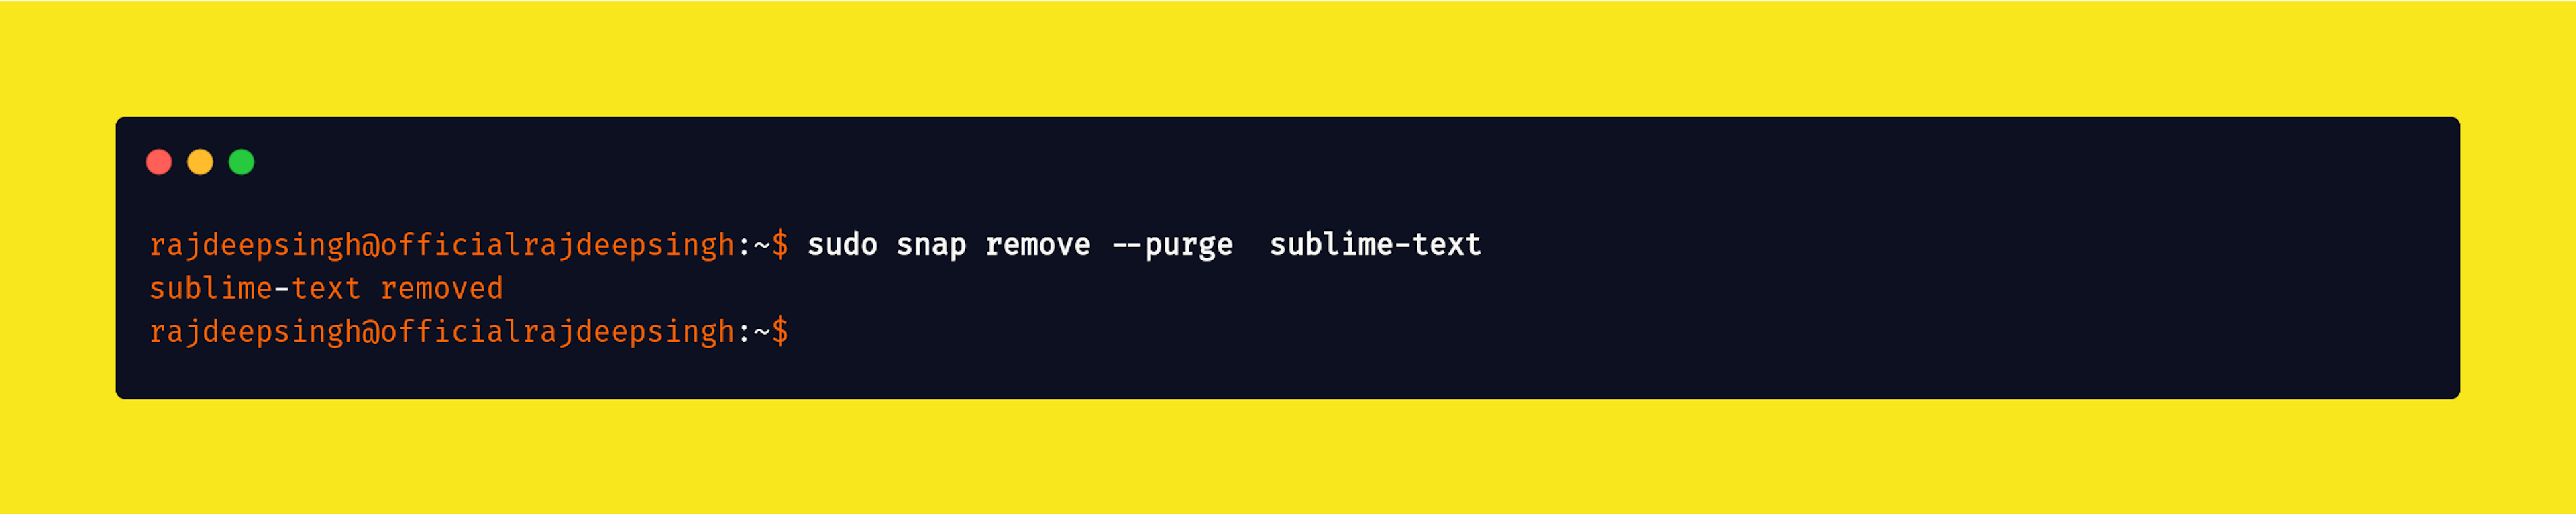 Remove sublime-text editor in Ubuntu